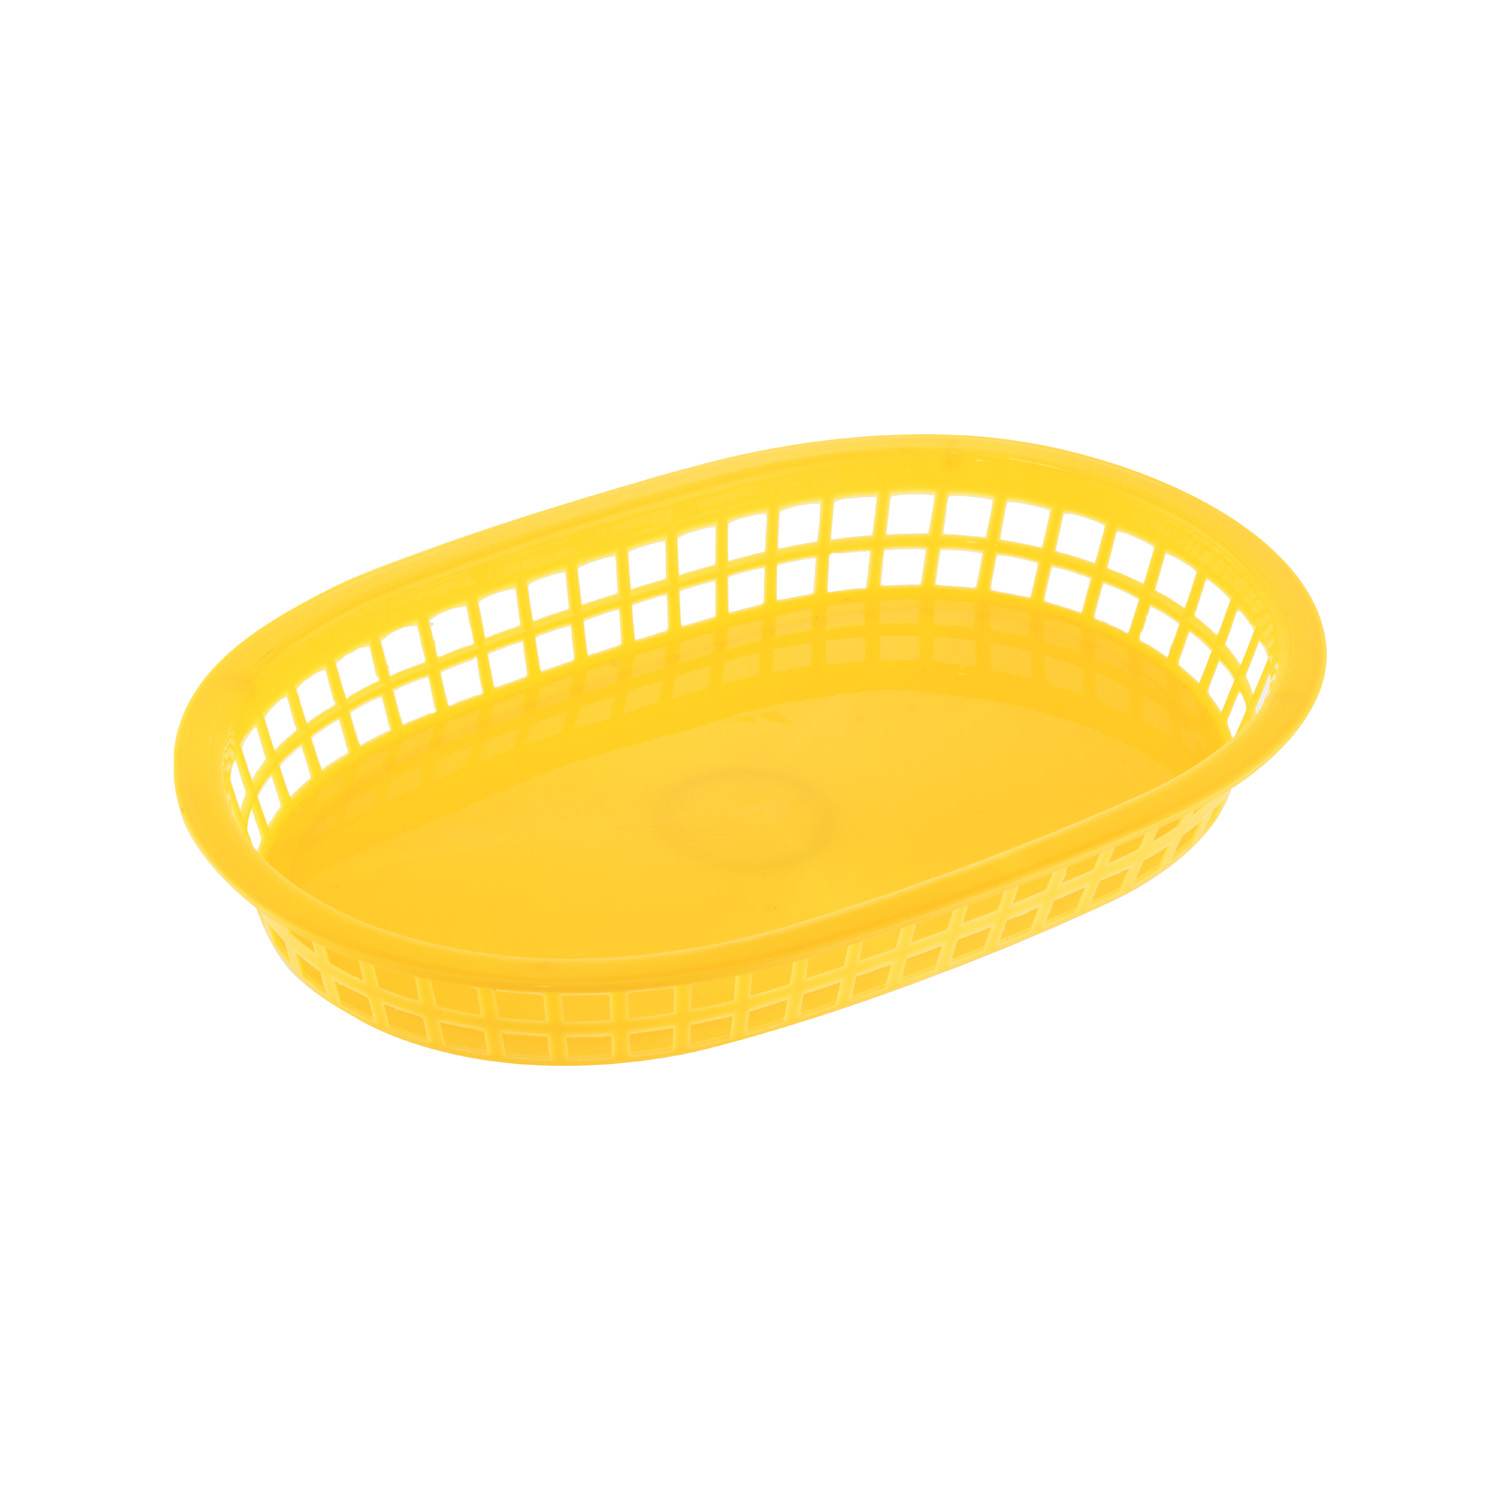 CAC China TTFB-10YL Yellow Plastic Oblong Fast Food Basket 10 7/8" L - 1 dozen